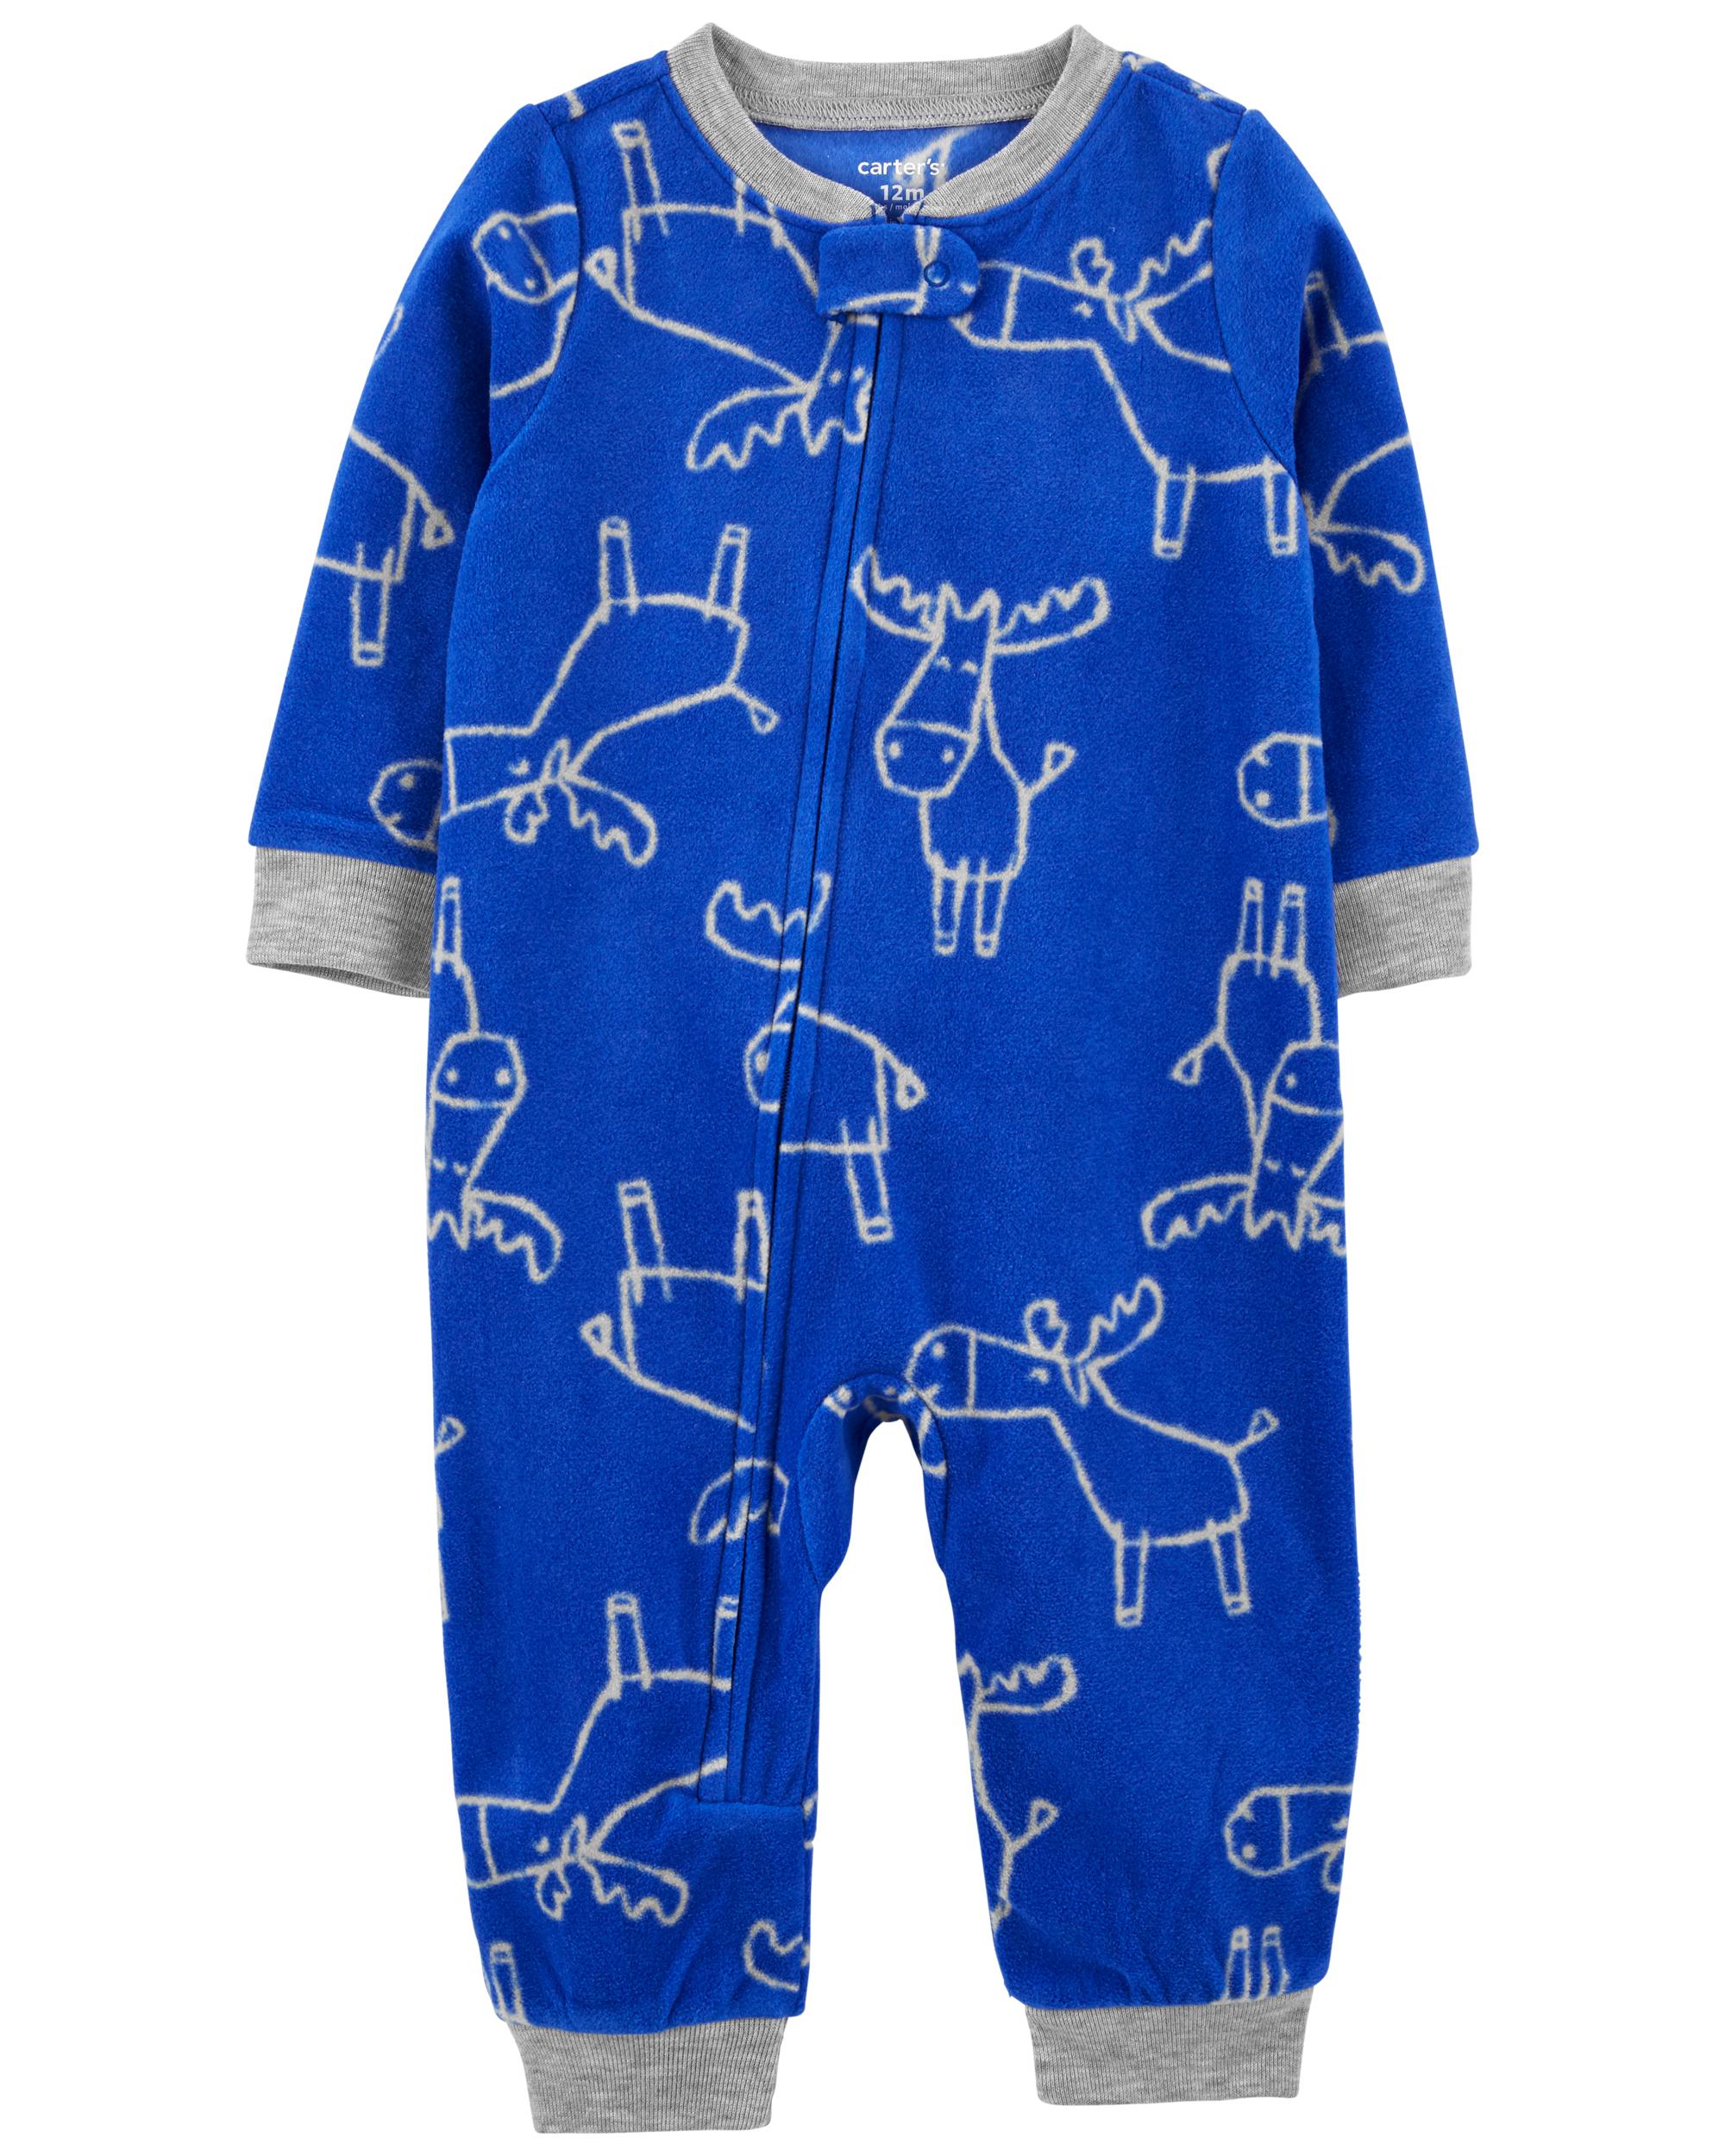 Moose Plaid, Men's Pajama Shorts